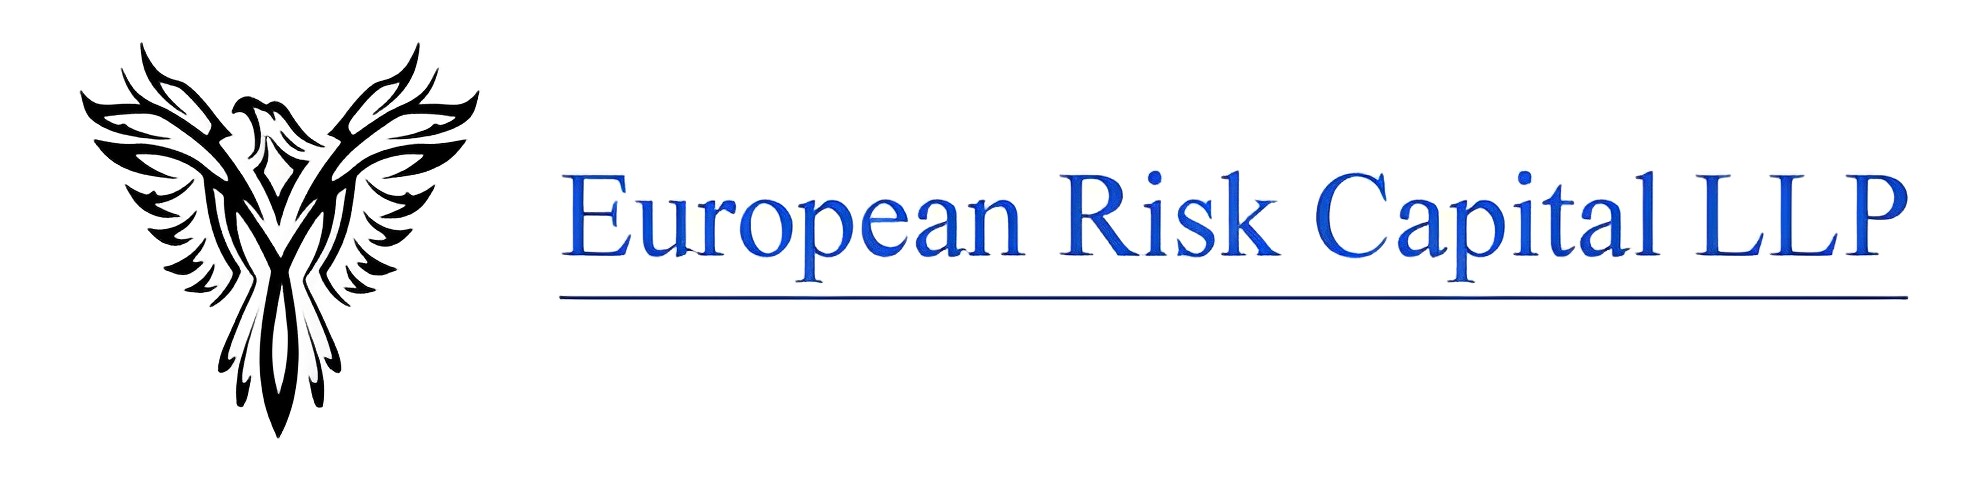 European Risk Capital LLP